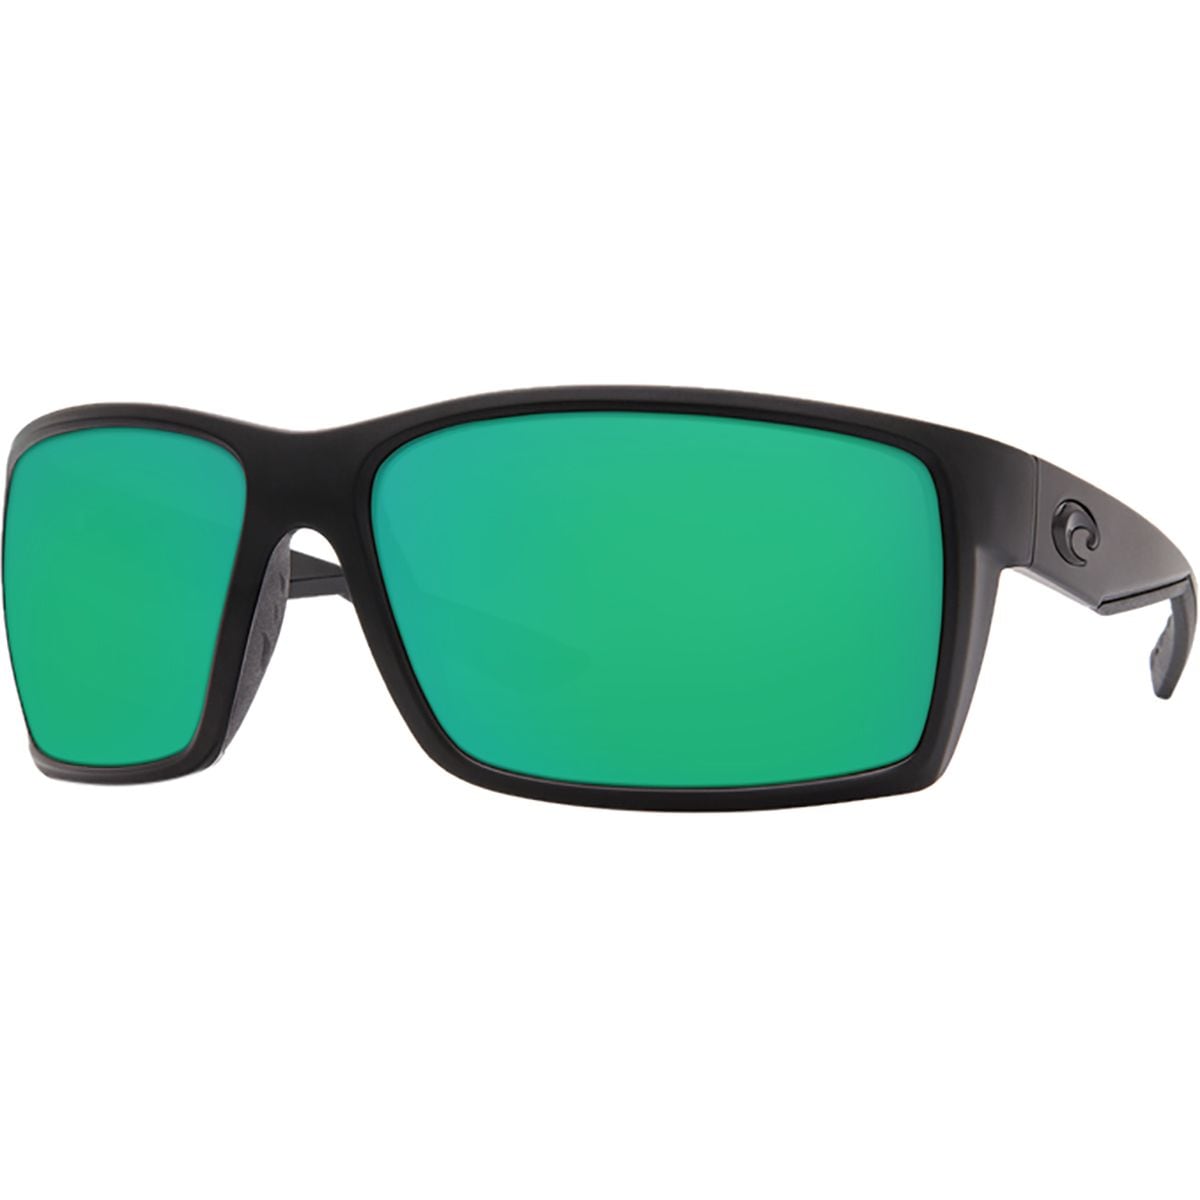 Pre-owned Costa Del Mar Costa Reefton 580g Polarized Sunglasses In Blackout Green Mirror 580g